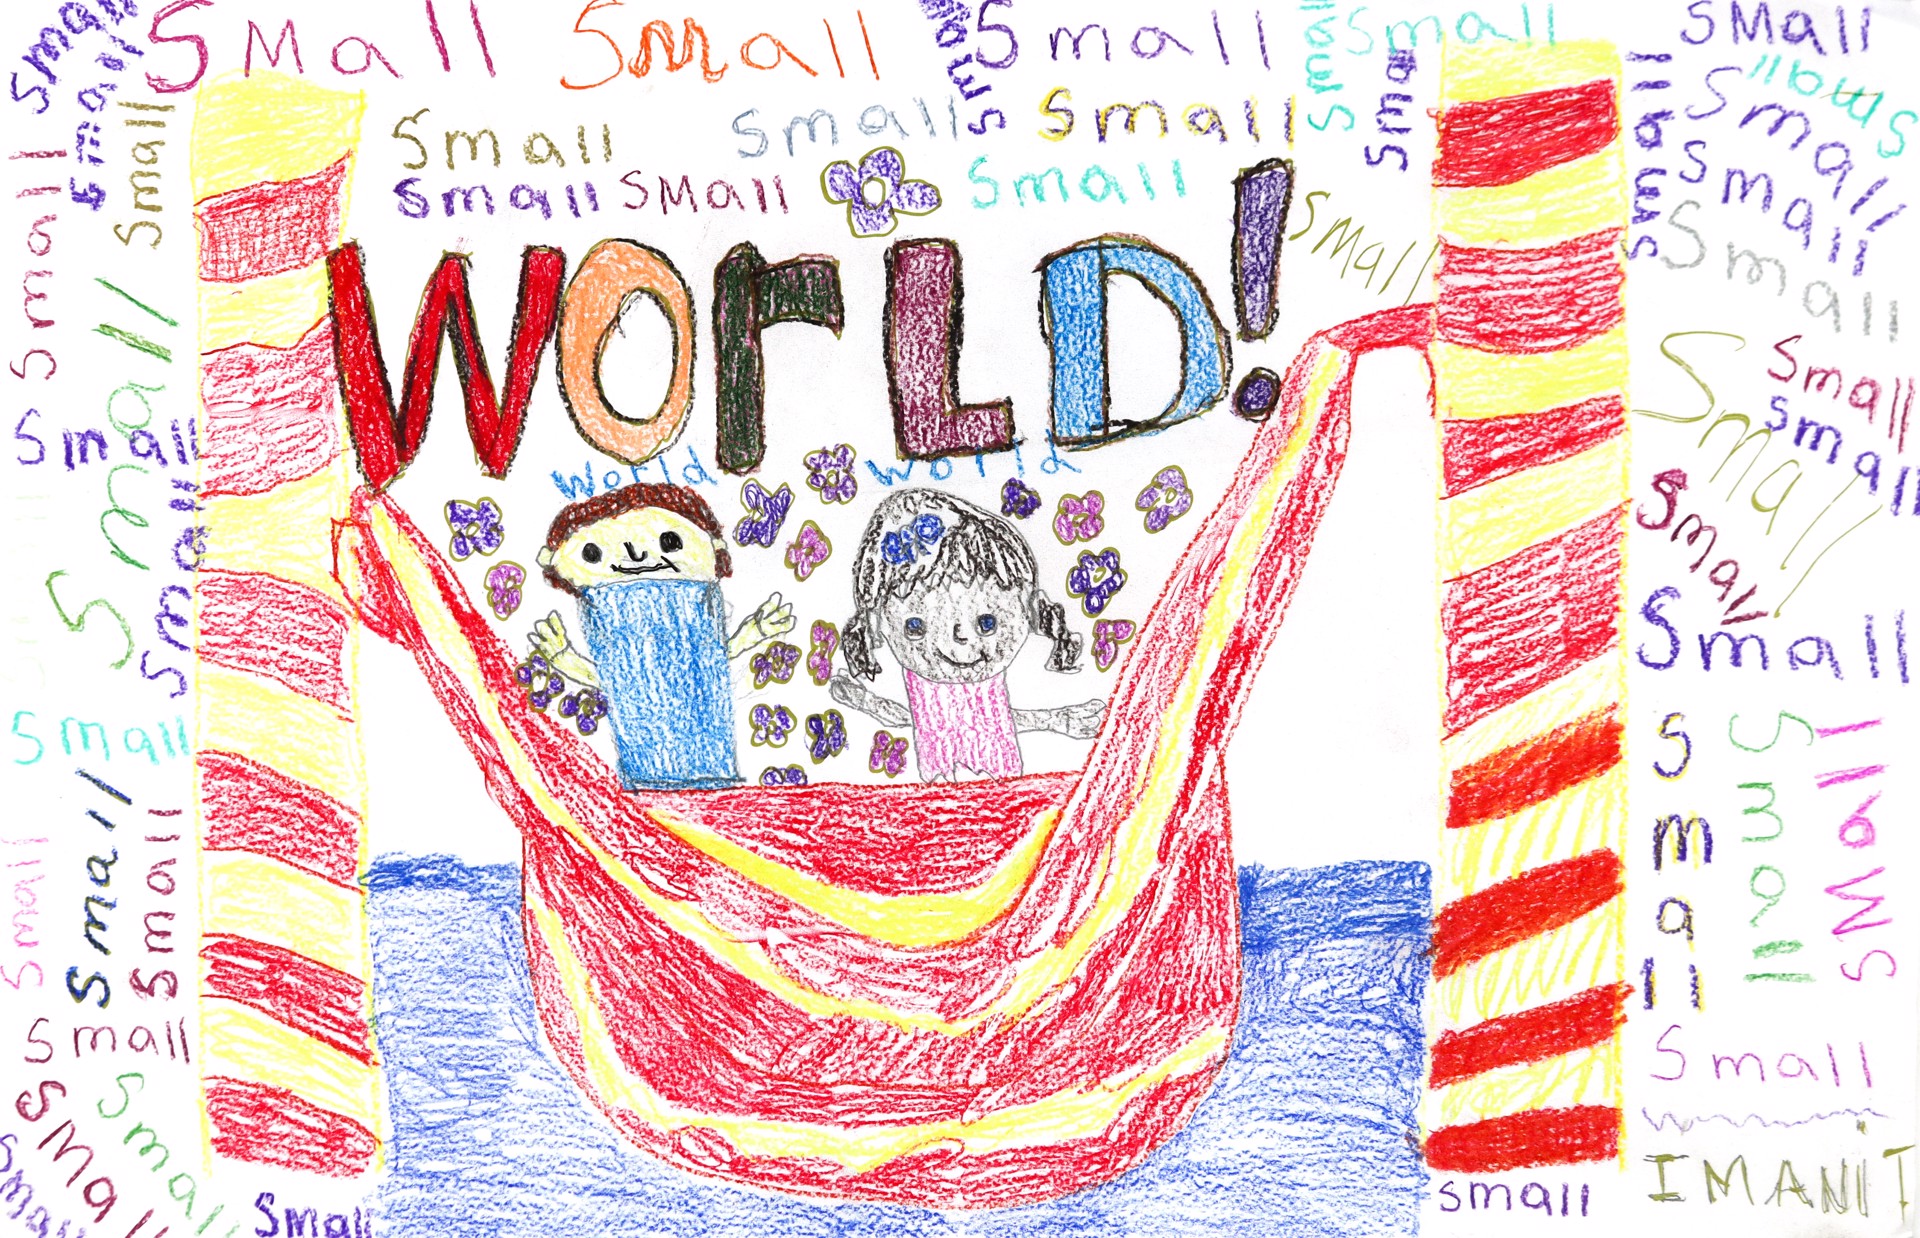 Small World by Imani Turner